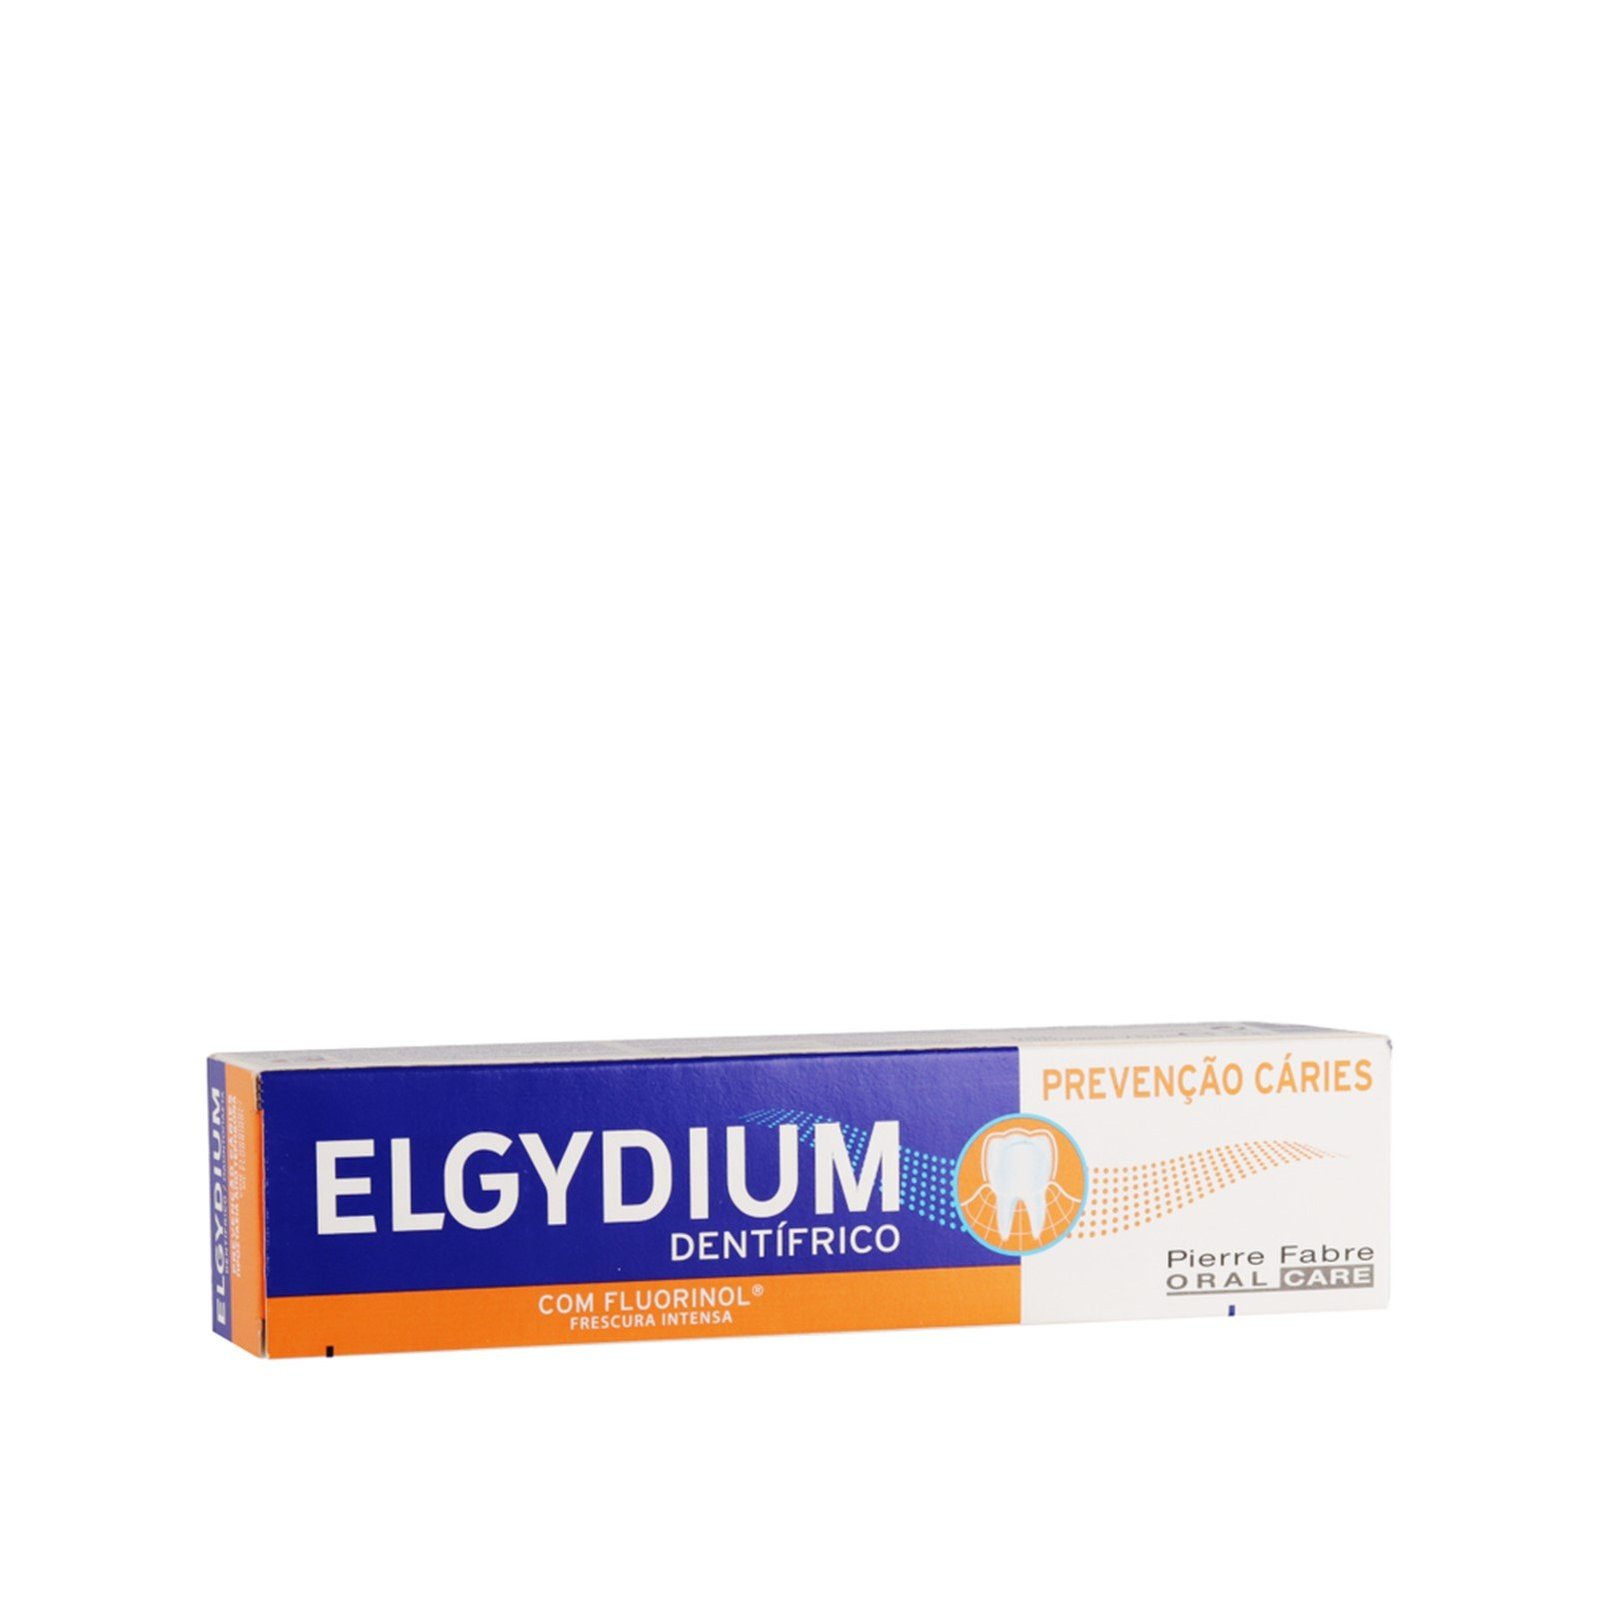 Elgydium Cavity Prevention Toothpaste 75ml (2.53 fl oz)